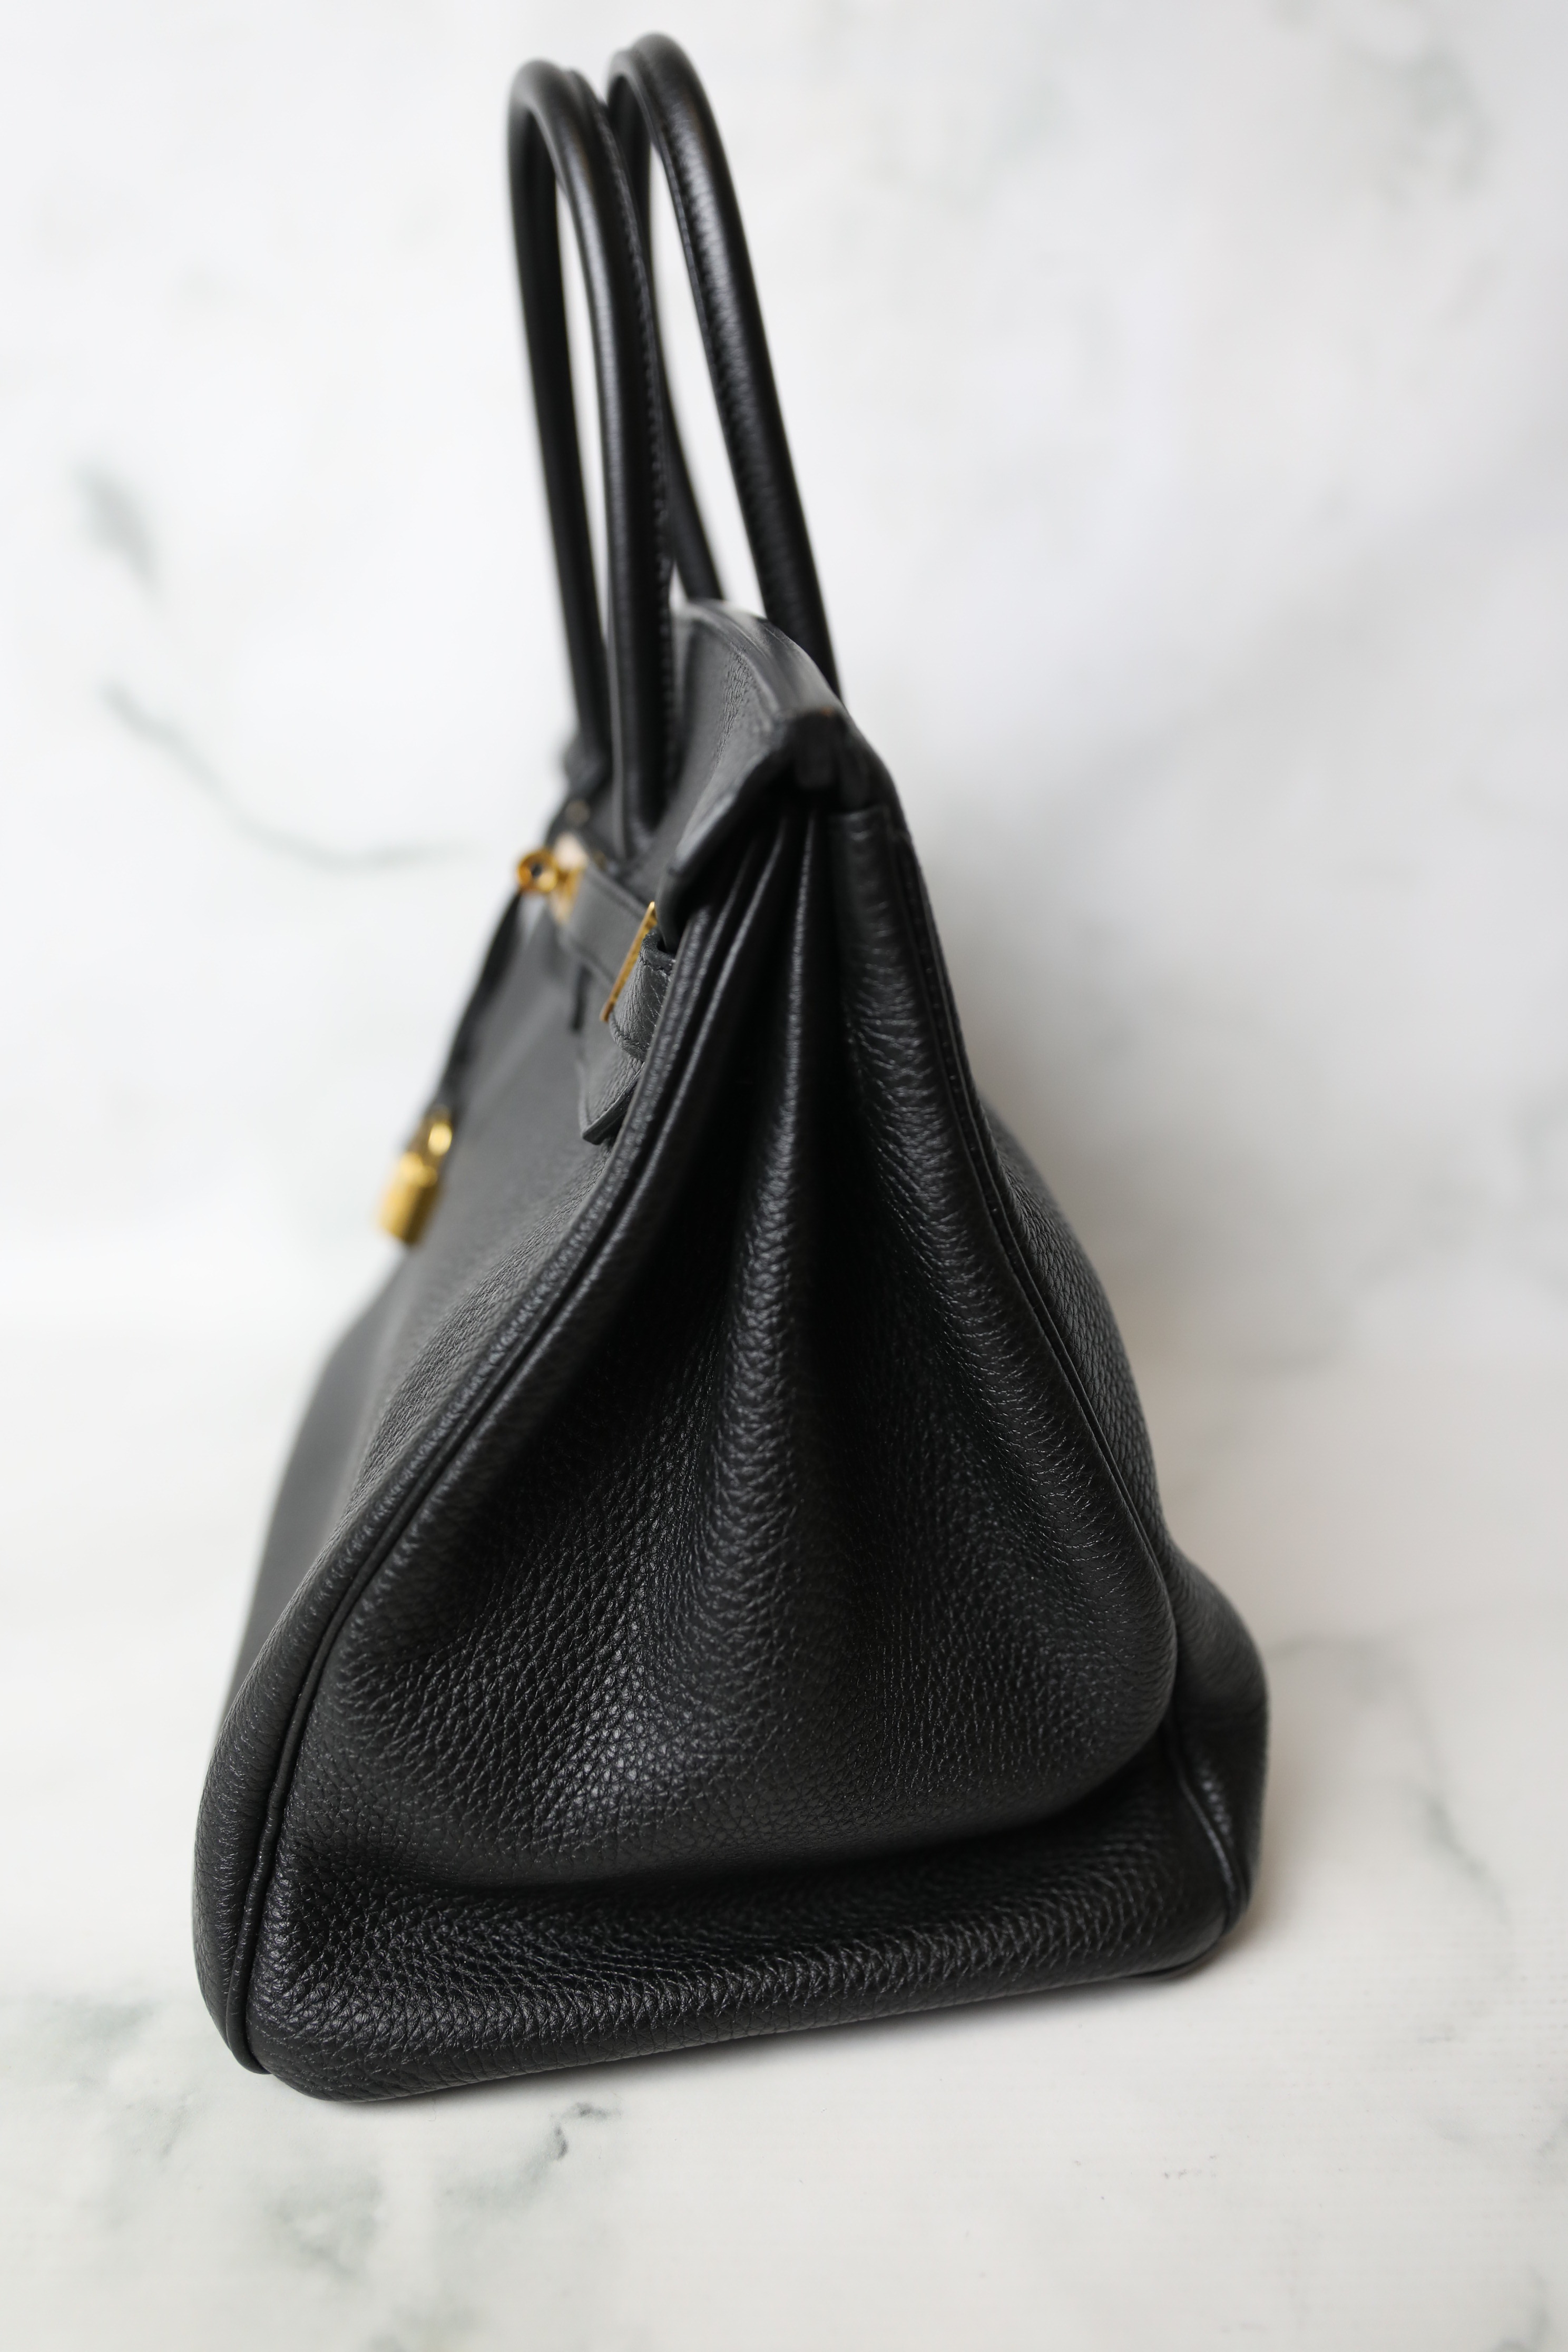 Hermes Birkin handbag 35cm in black and fuchsia pink cro…